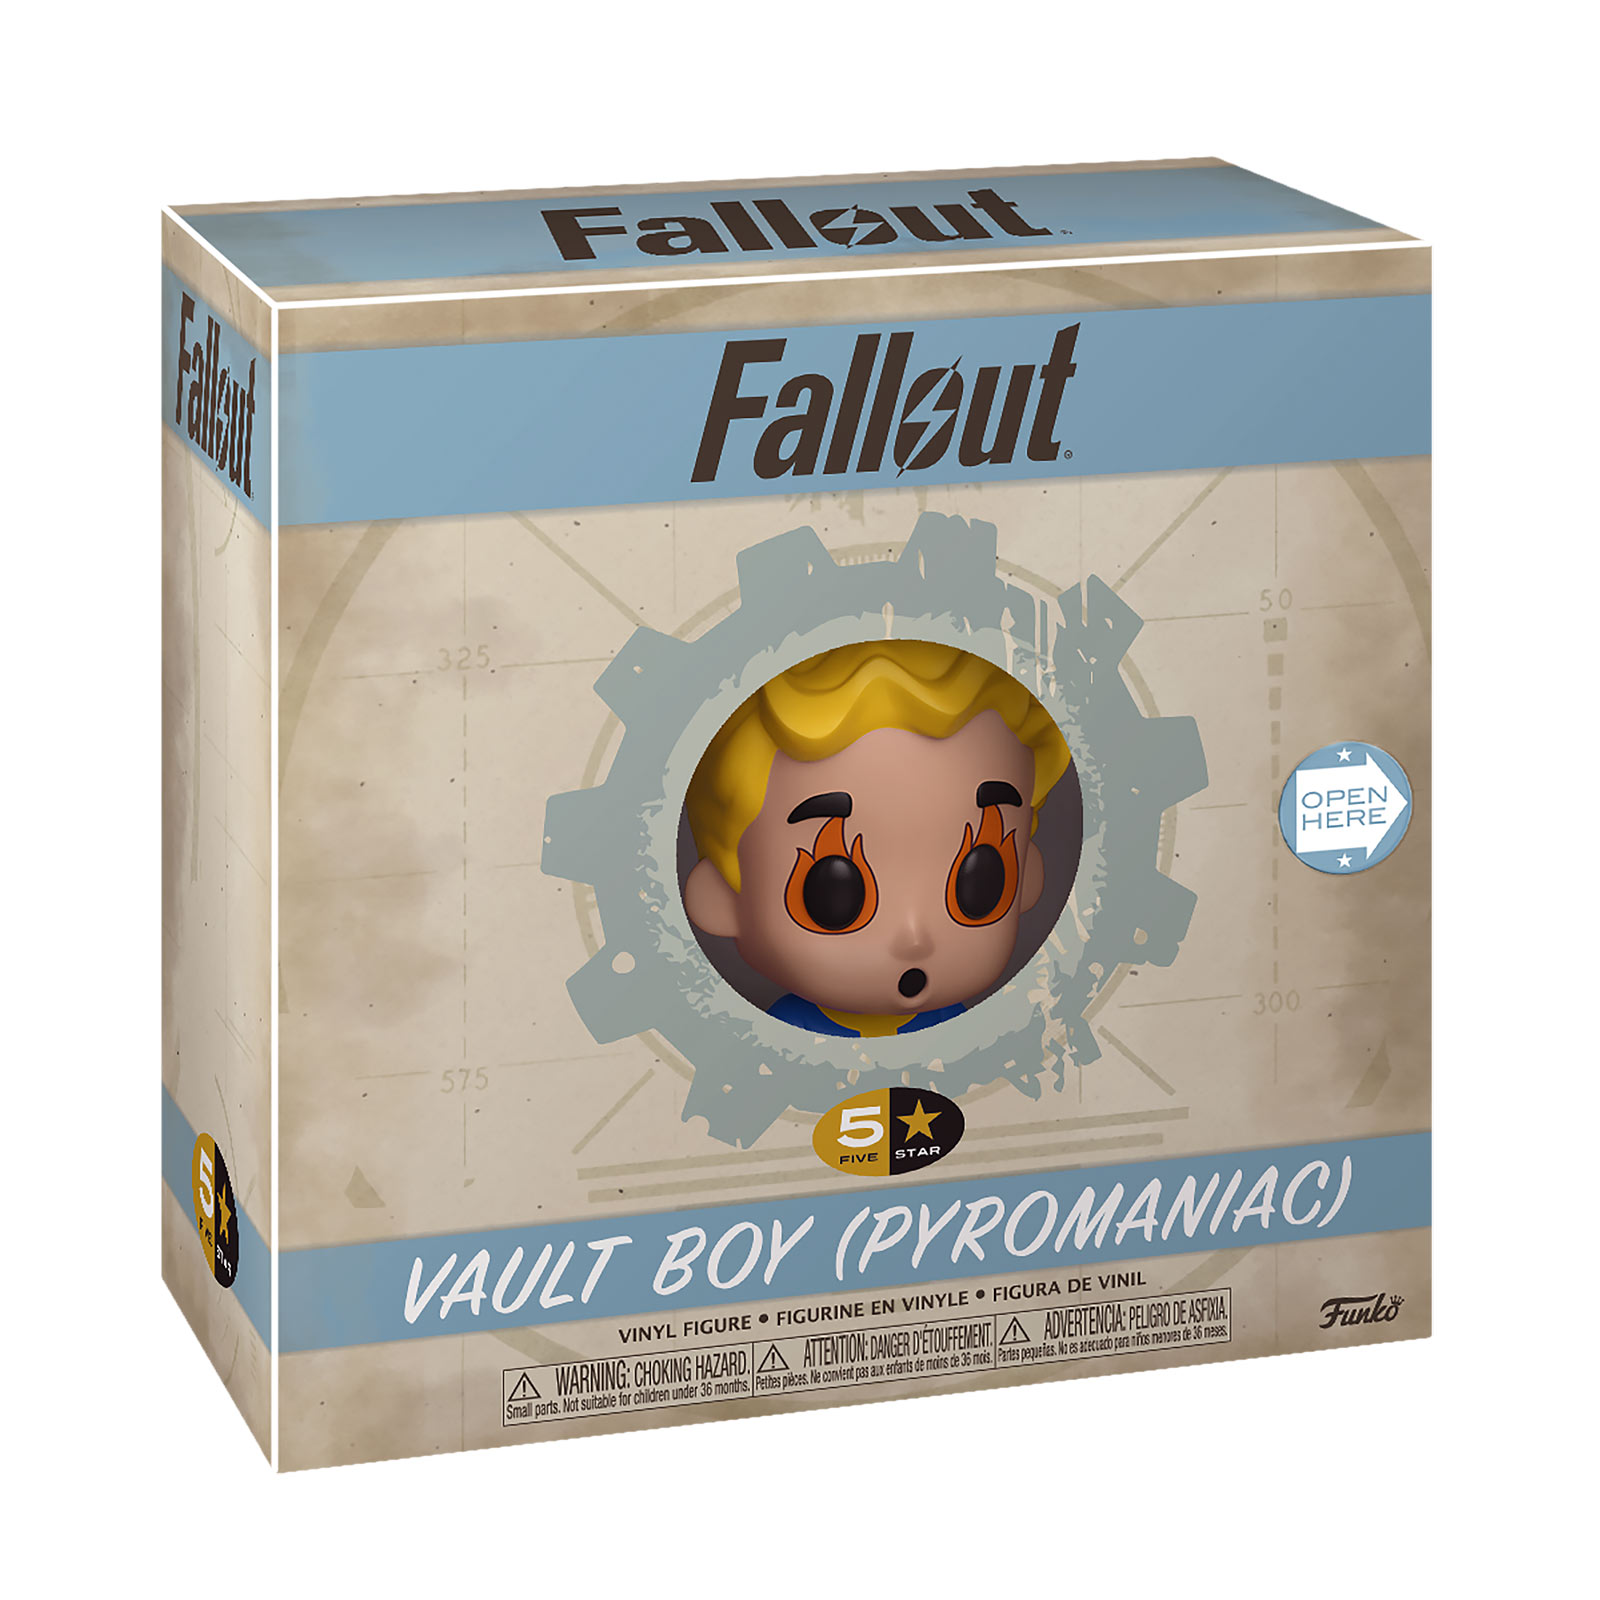 Fallout - Vault Boy Pyromaniac Funko Five Star Figure